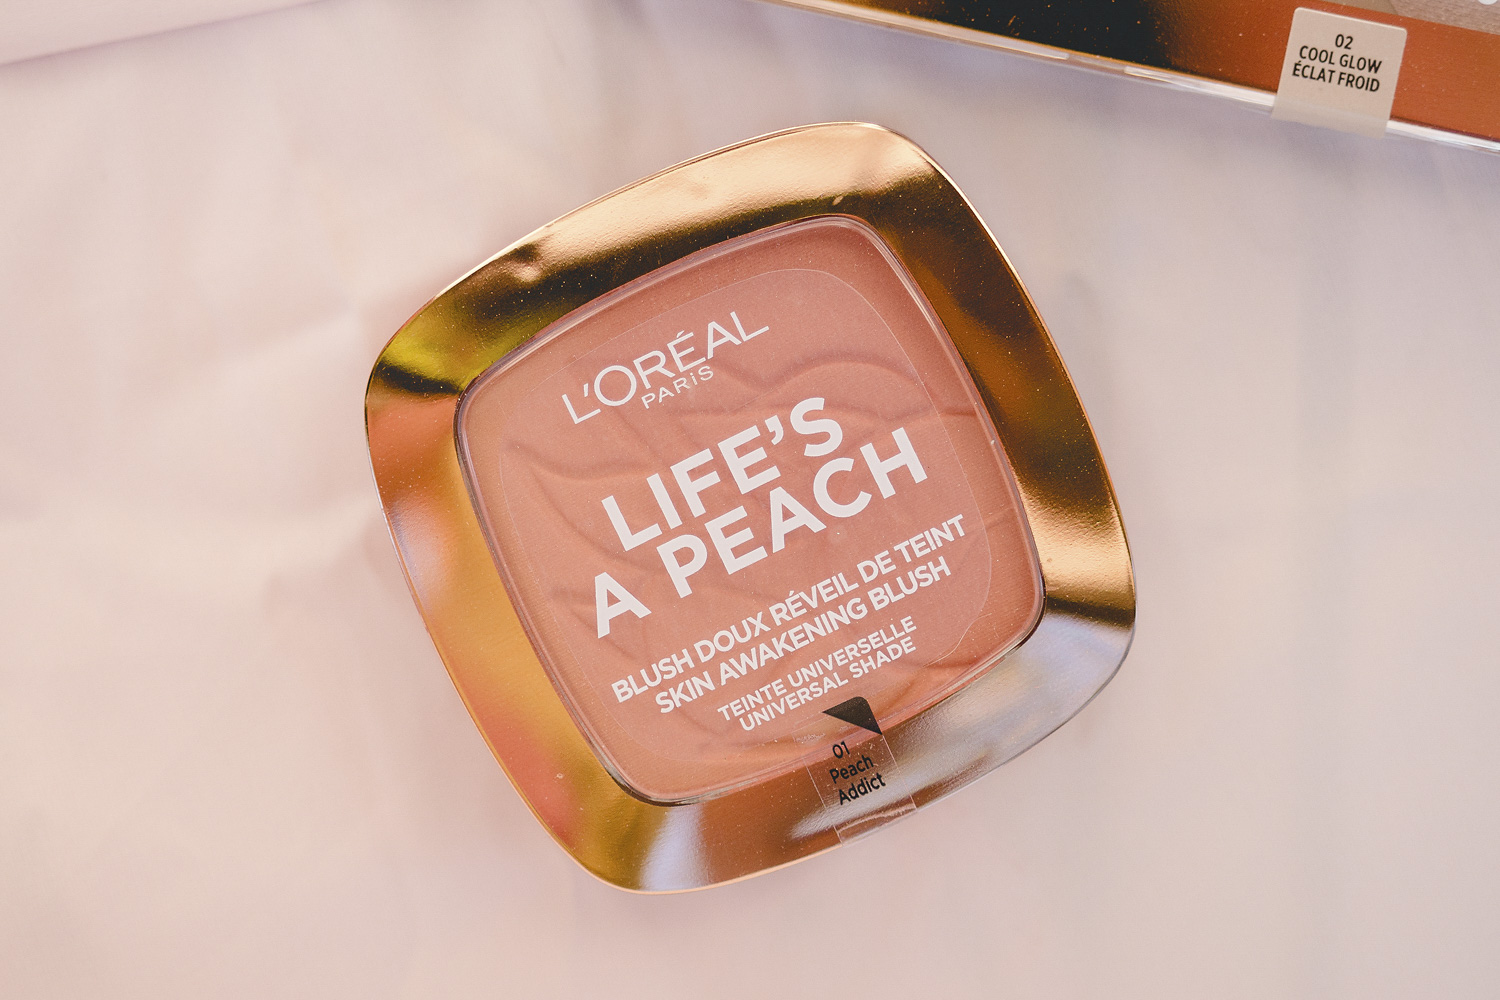 l'oréal paris glow toolbox lifes a peach blush